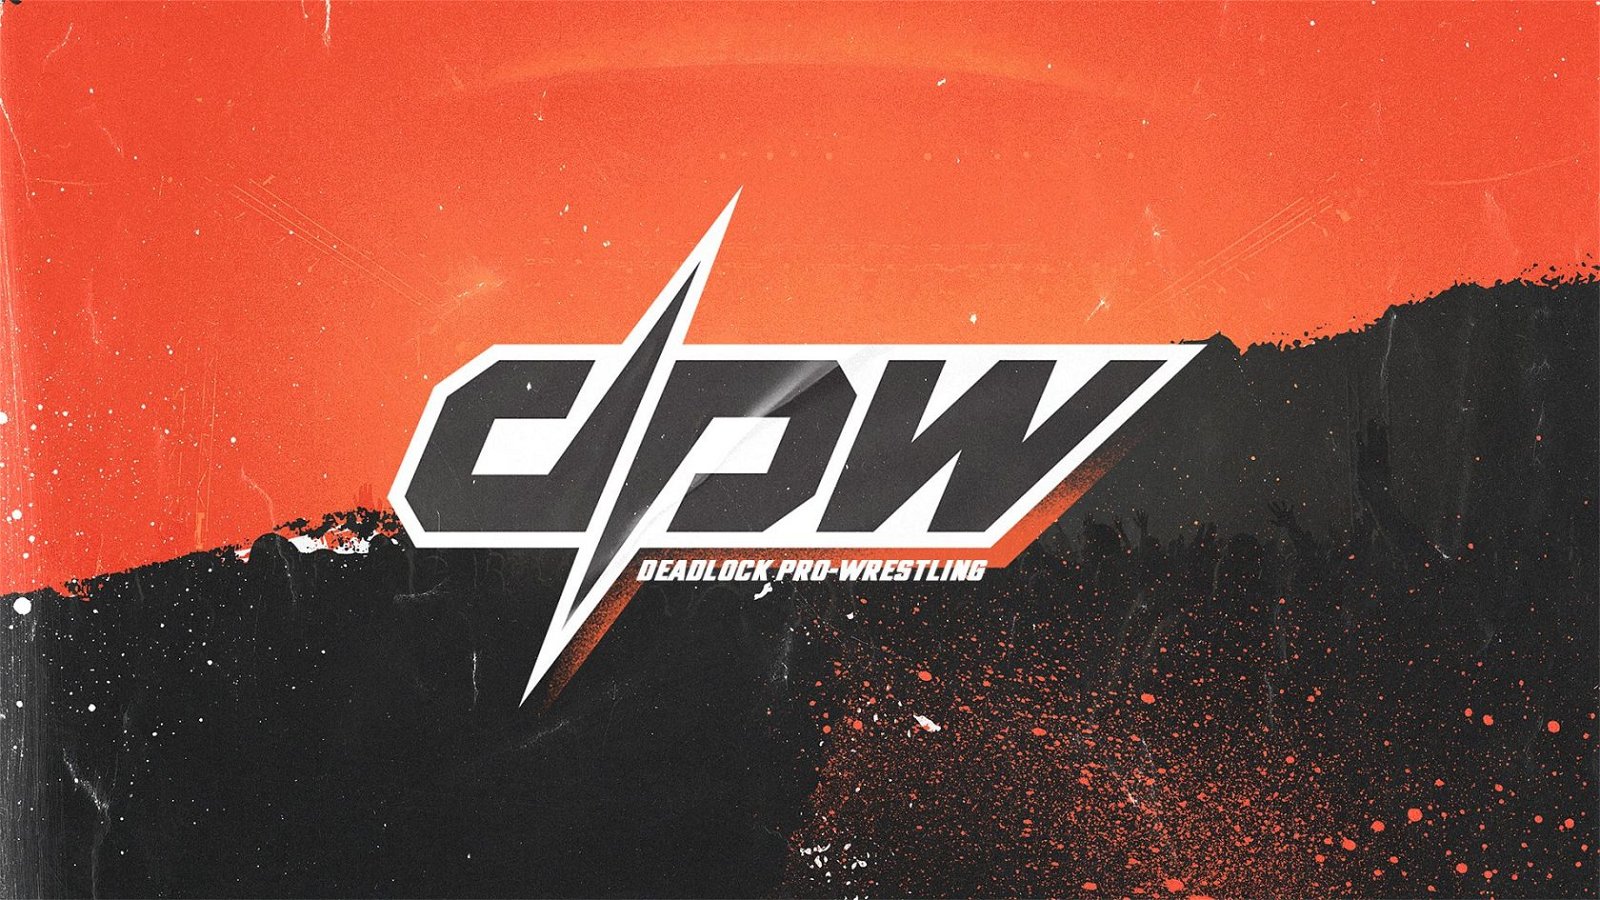 DEADLOCK Pro-Wrestling Officially Announced